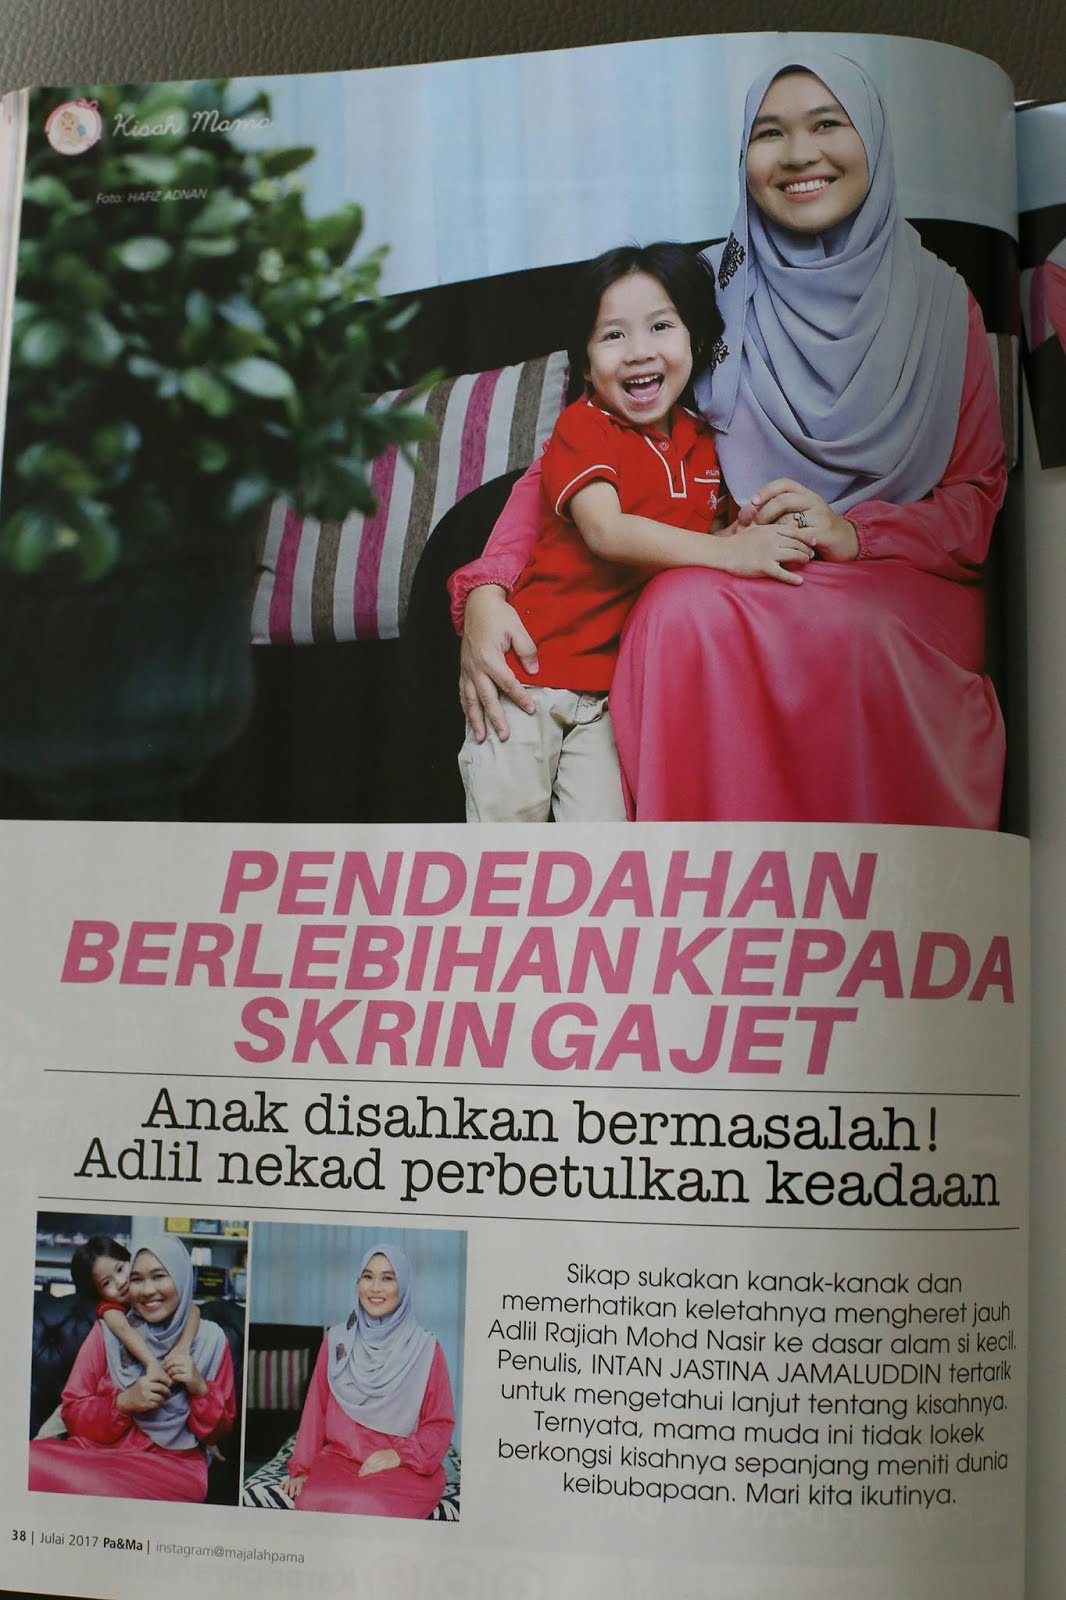 Featured in Majalah PA&MA